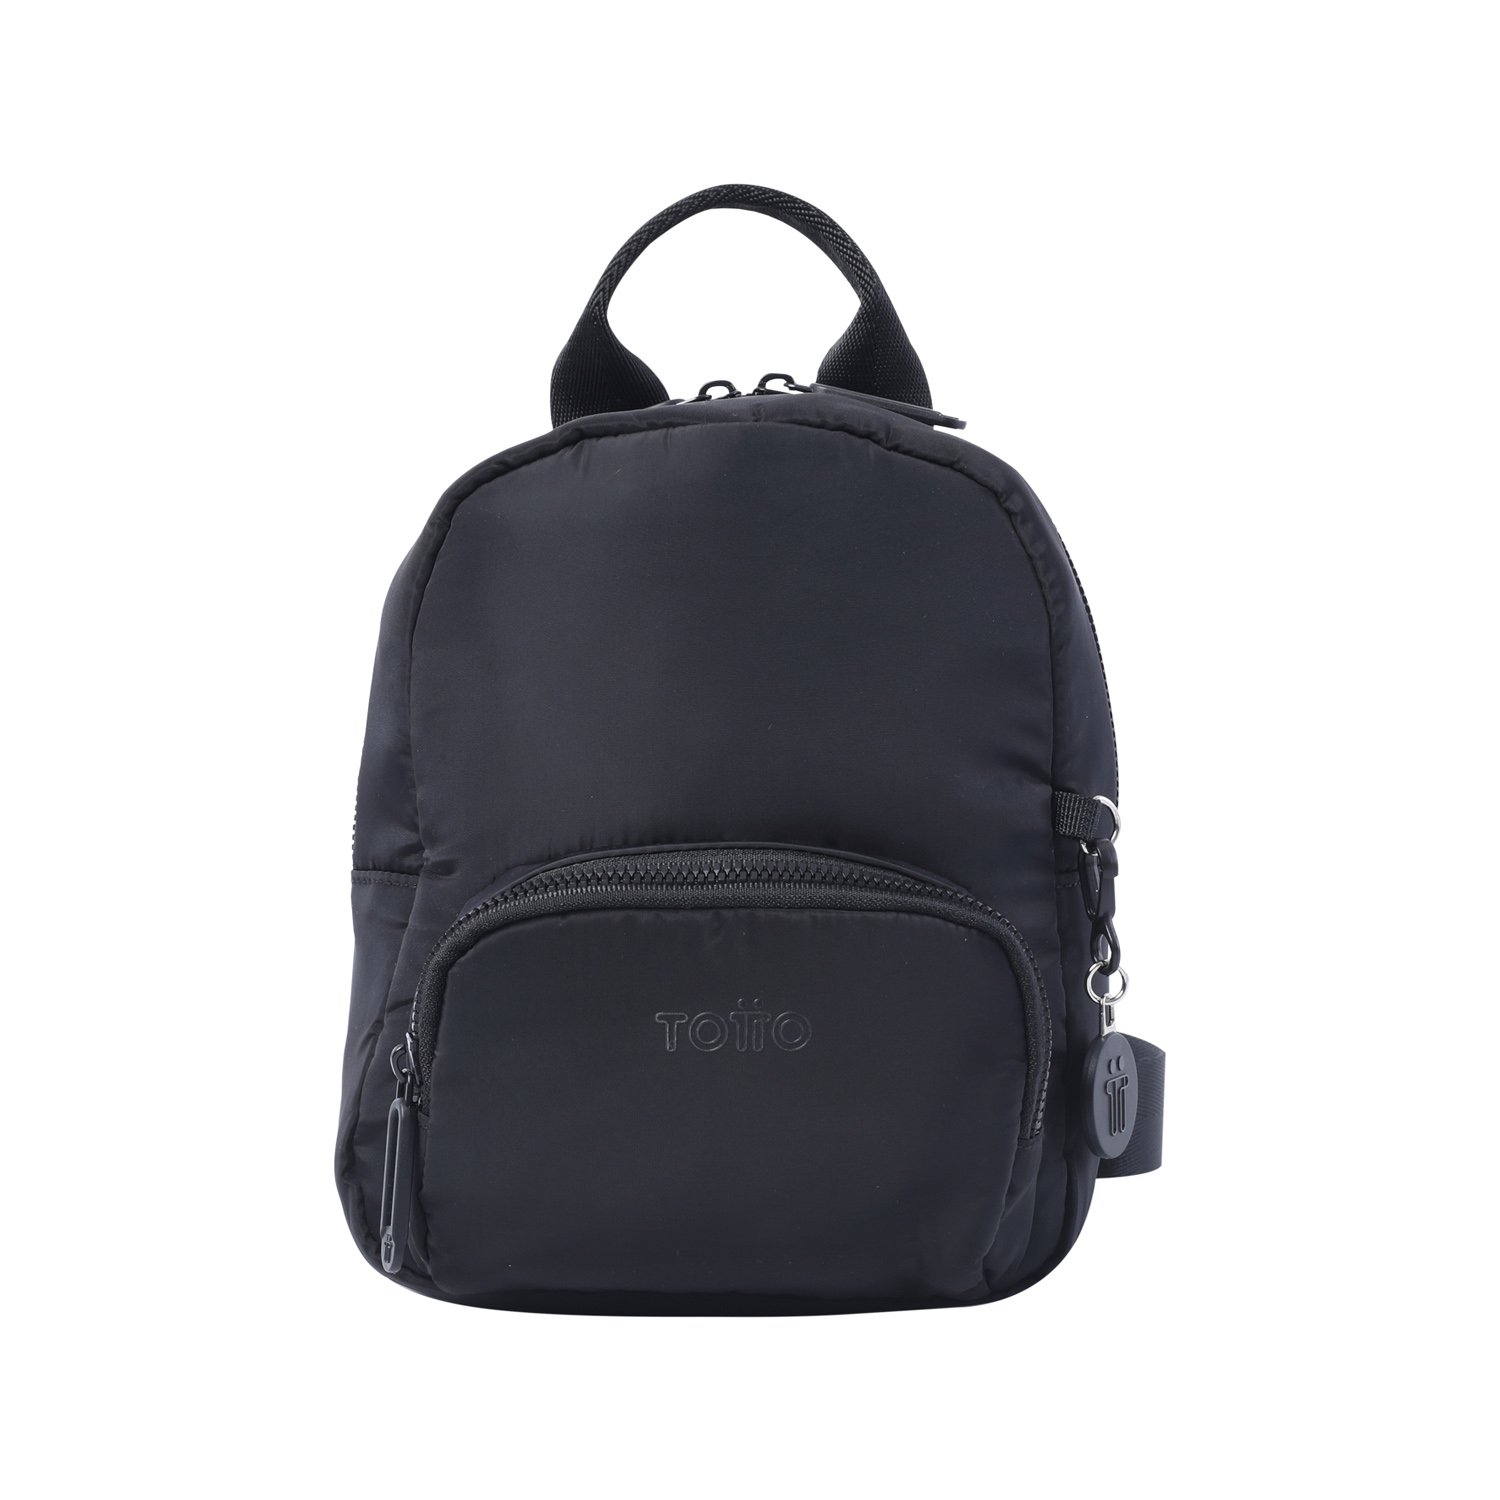 Mini mochila urbana negro - Yuen 2.0